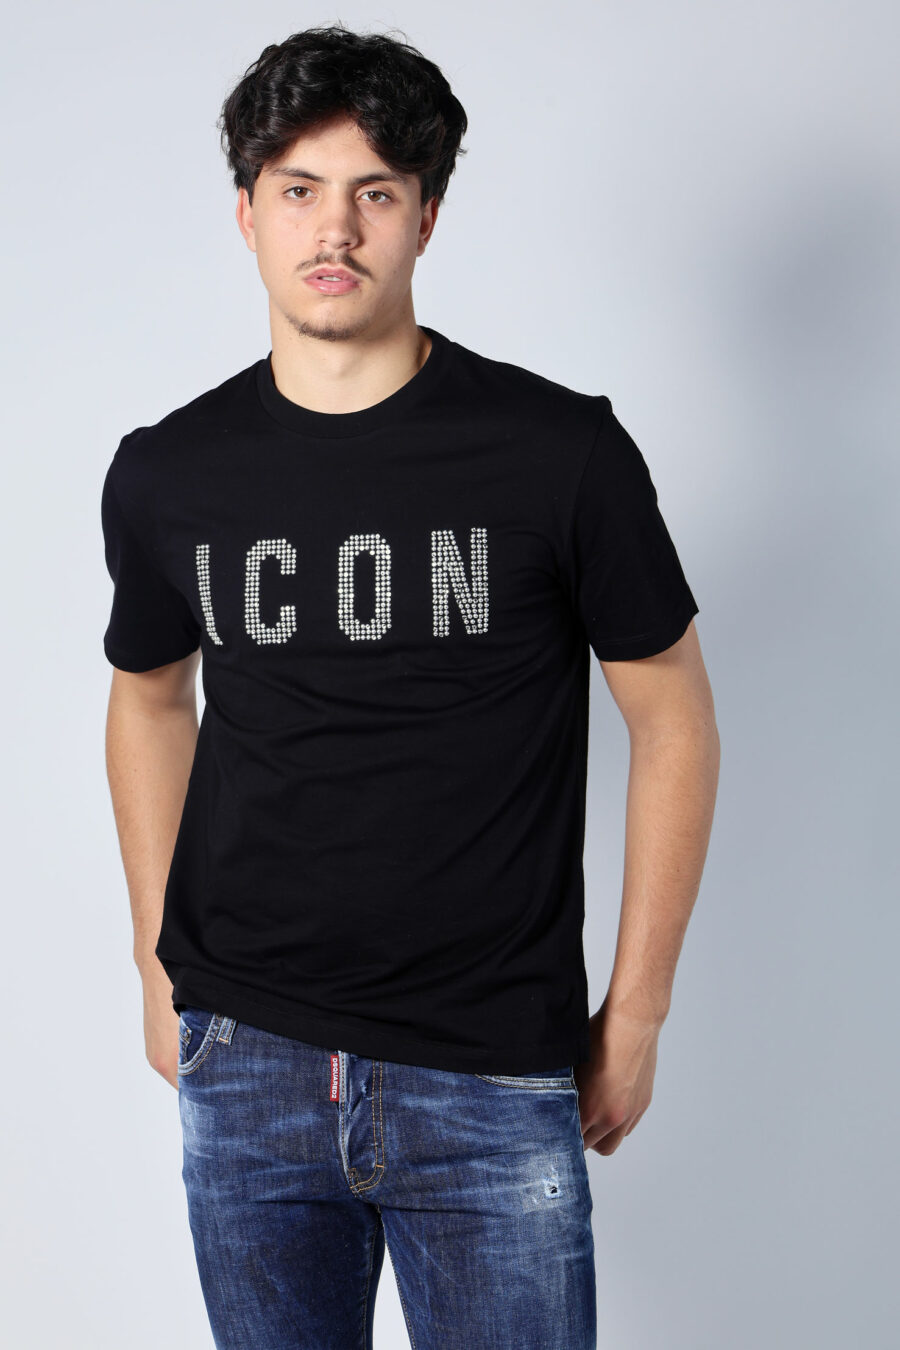 Black T-shirt with white checked "icon" logo - Untitled Catalog 05673